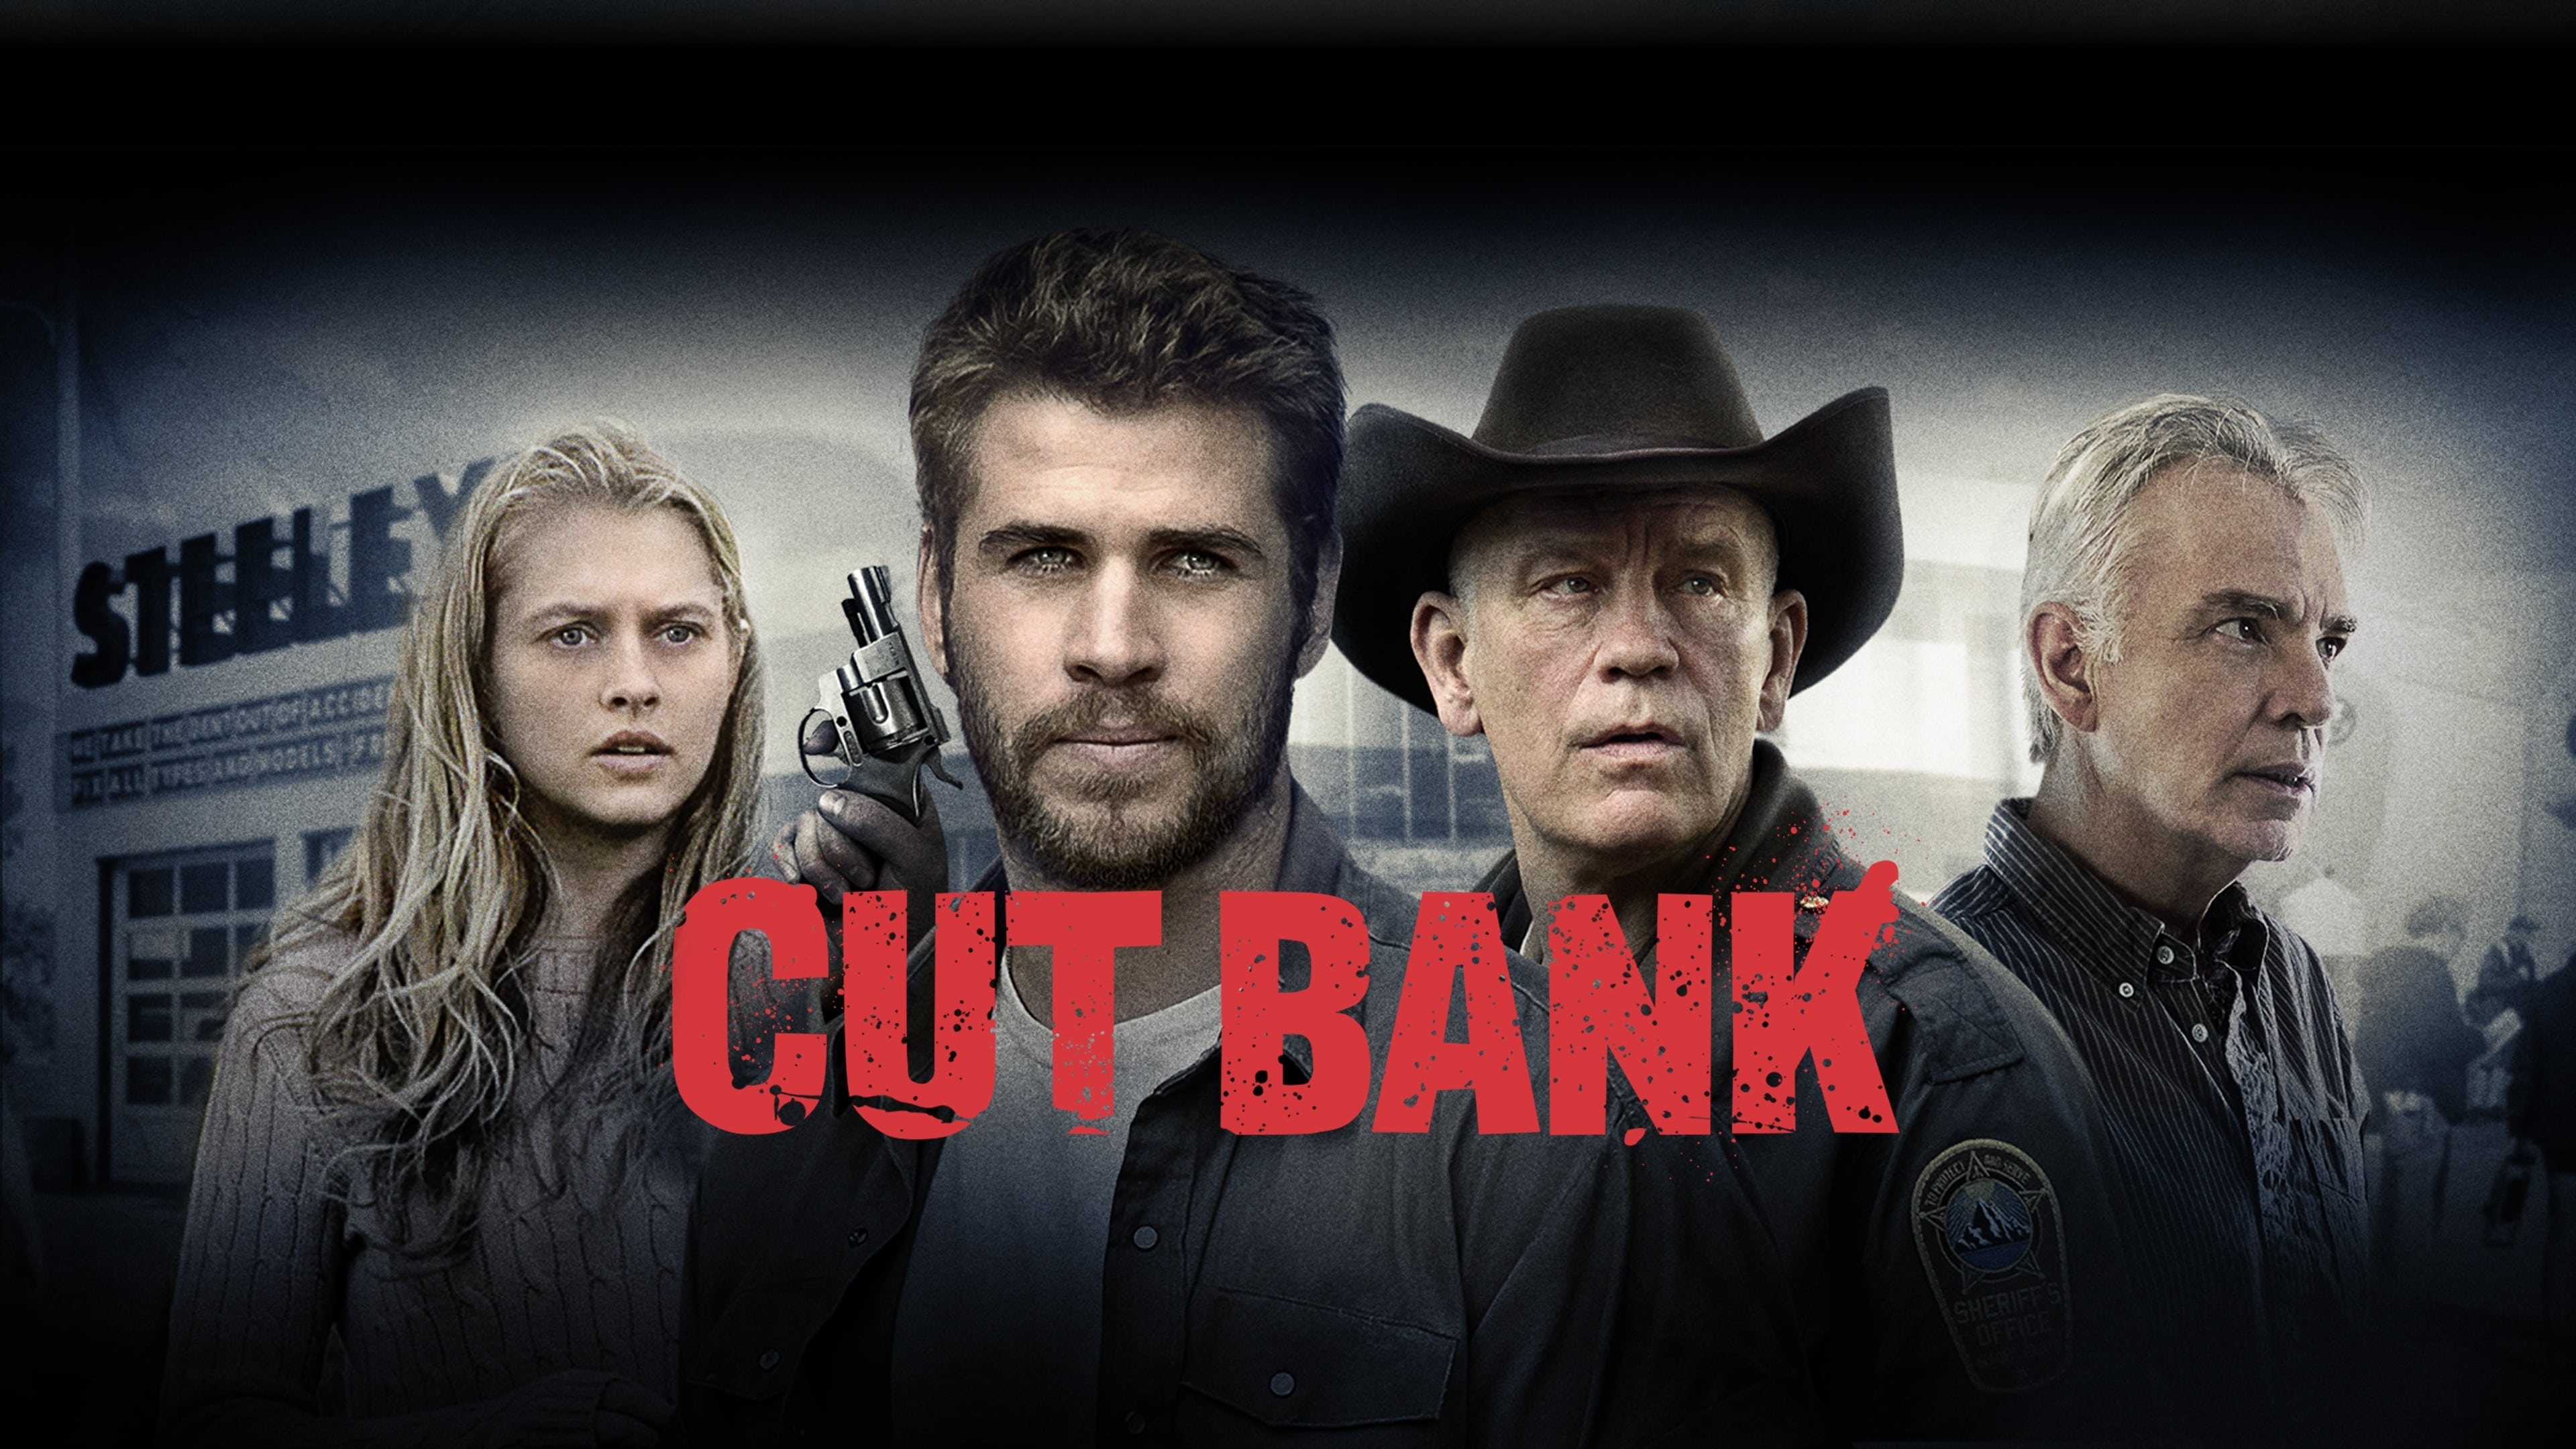 Cut Bank - Crimine chiama crimine